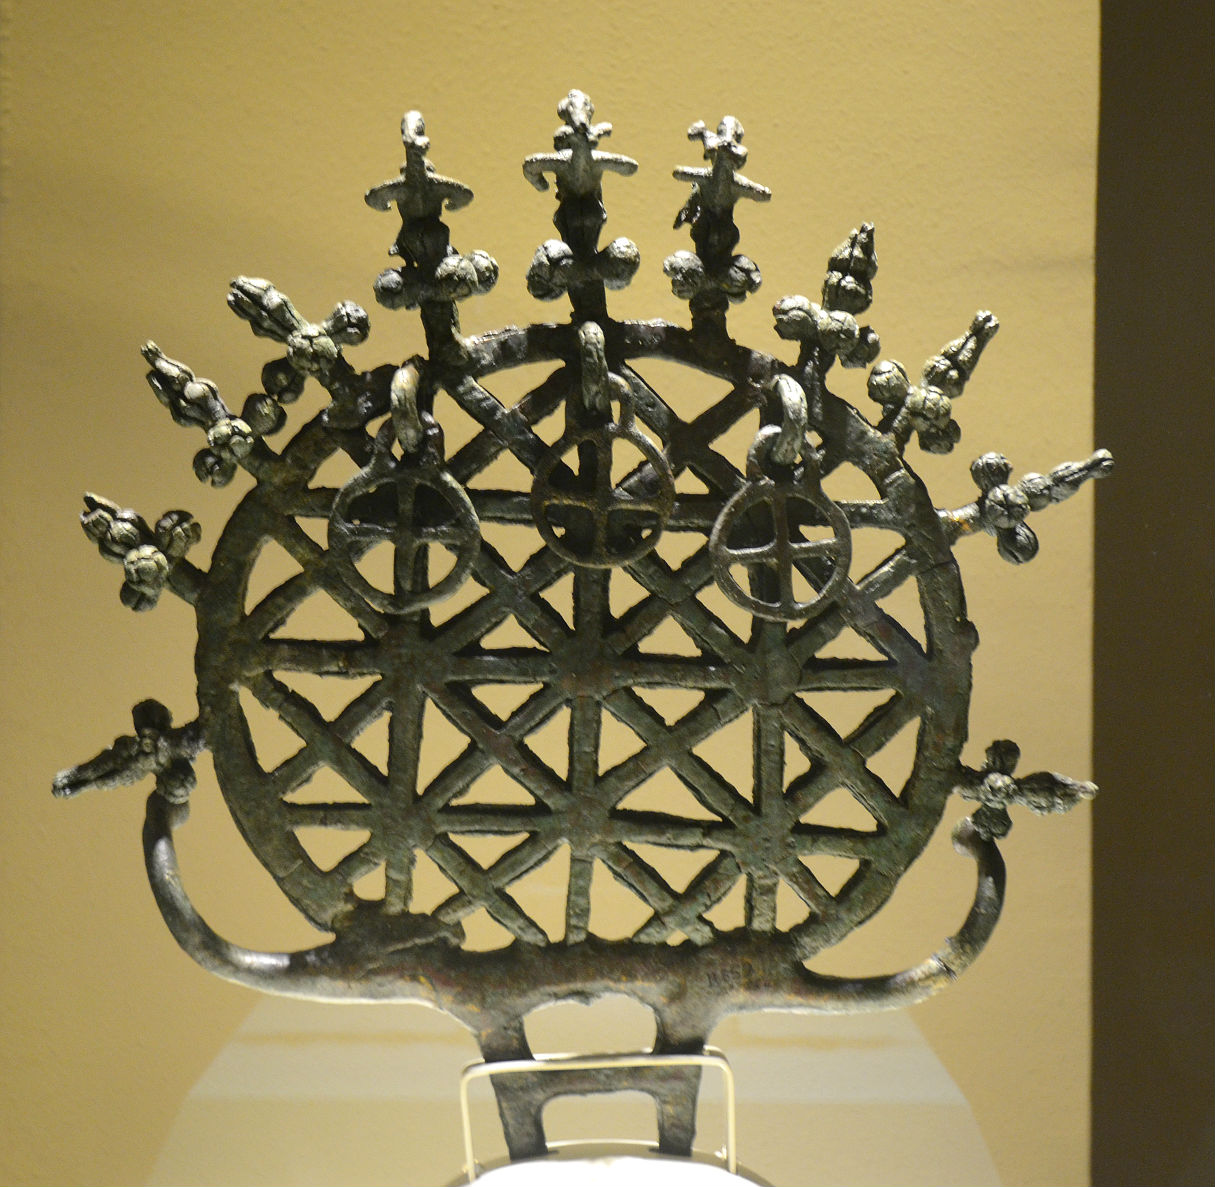 The most famous Hittite sun disc standard